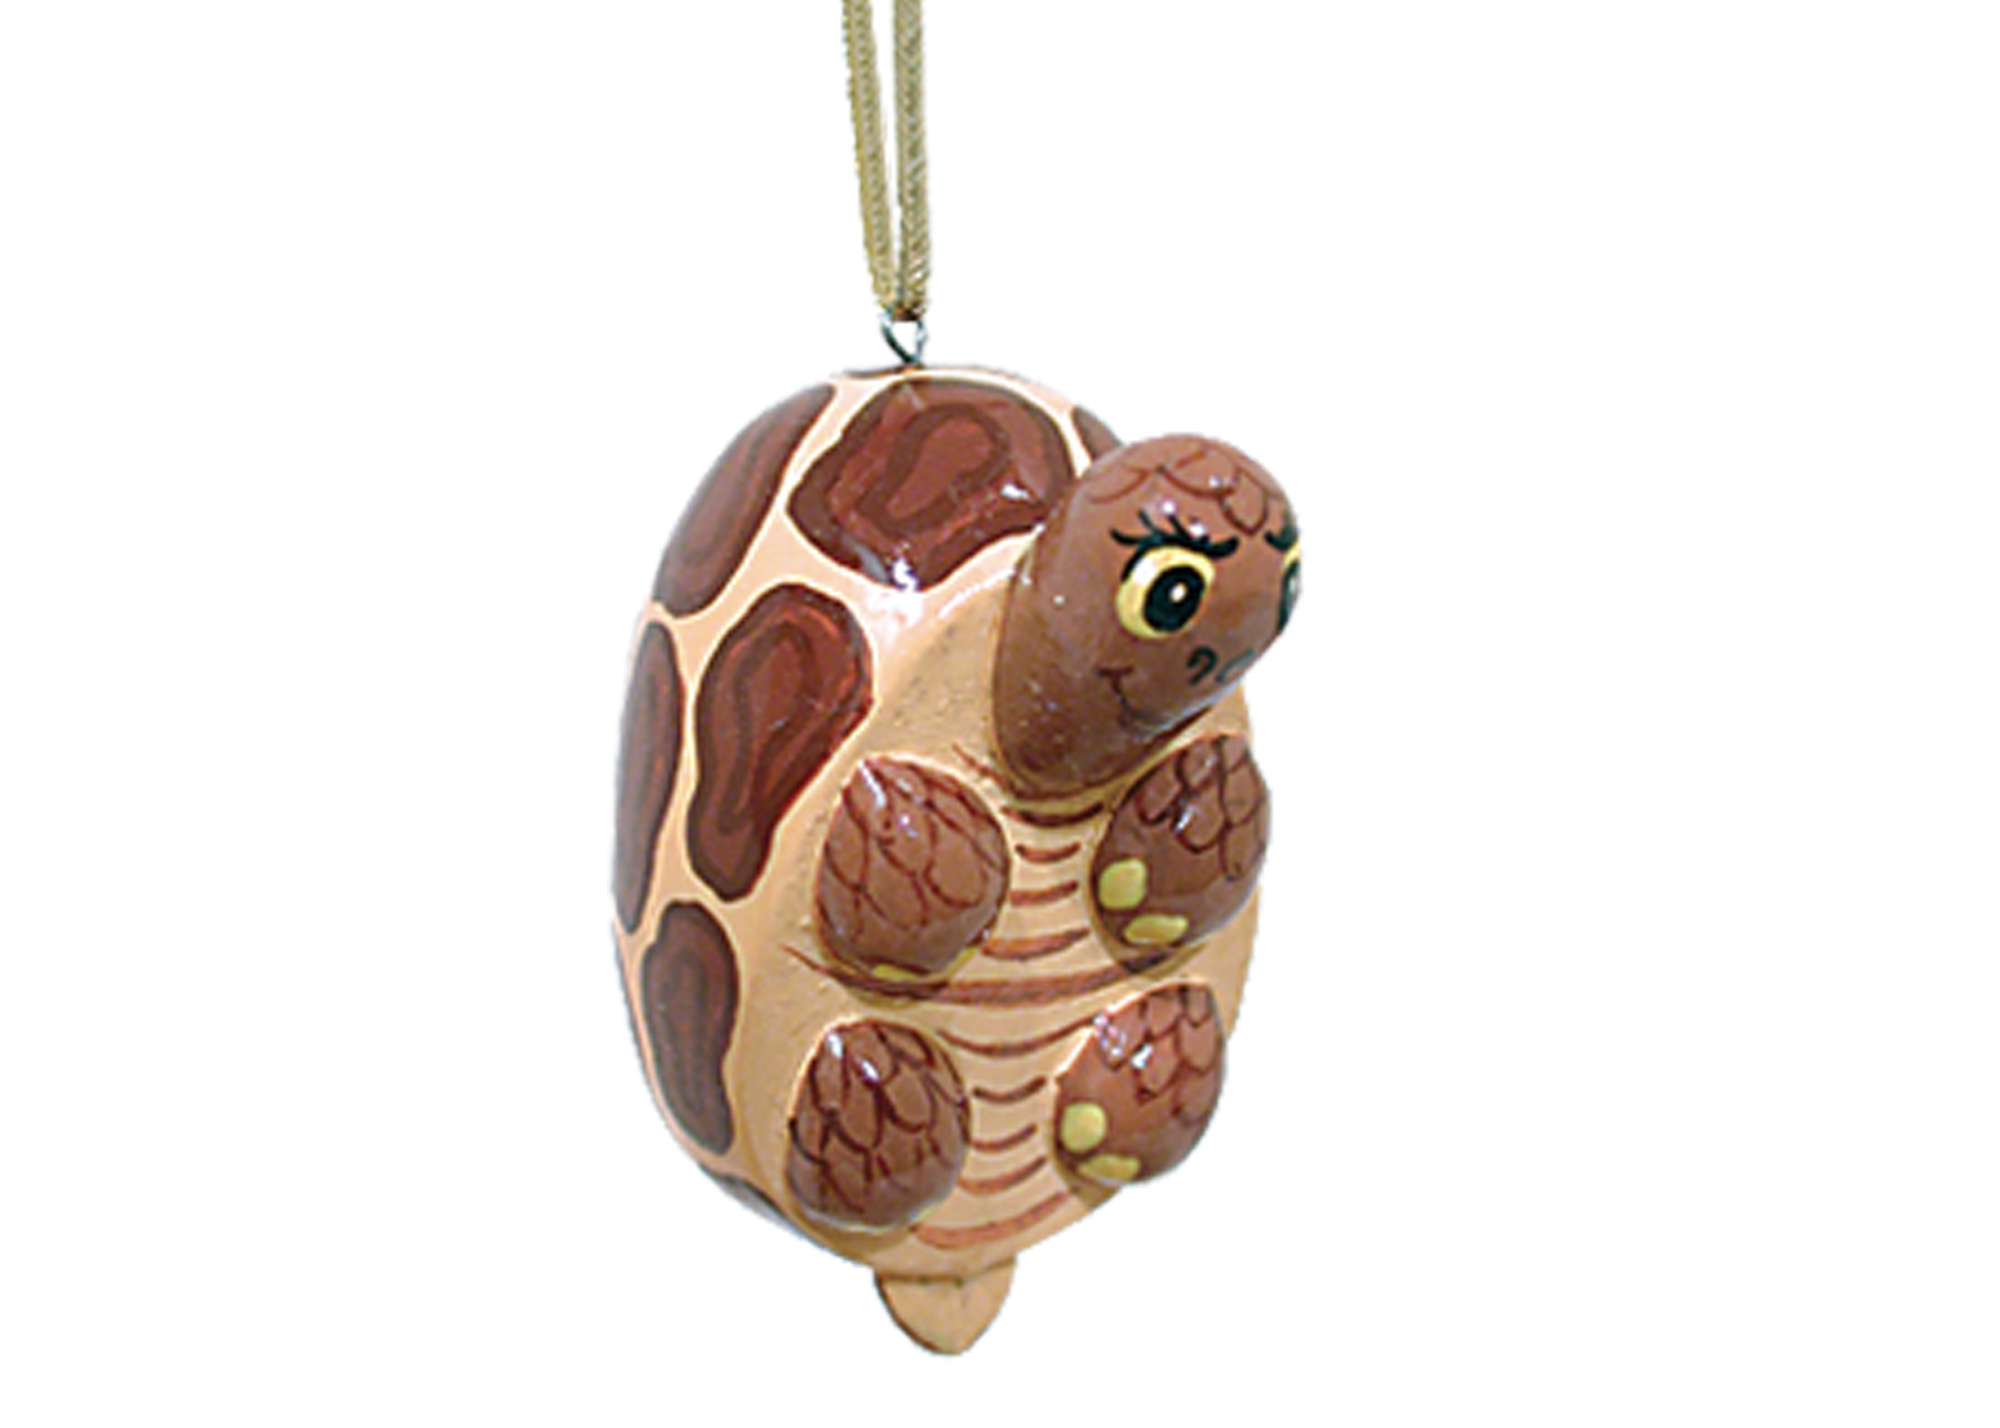 Buy Turtle Ornament, 2" at GoldenCockerel.com